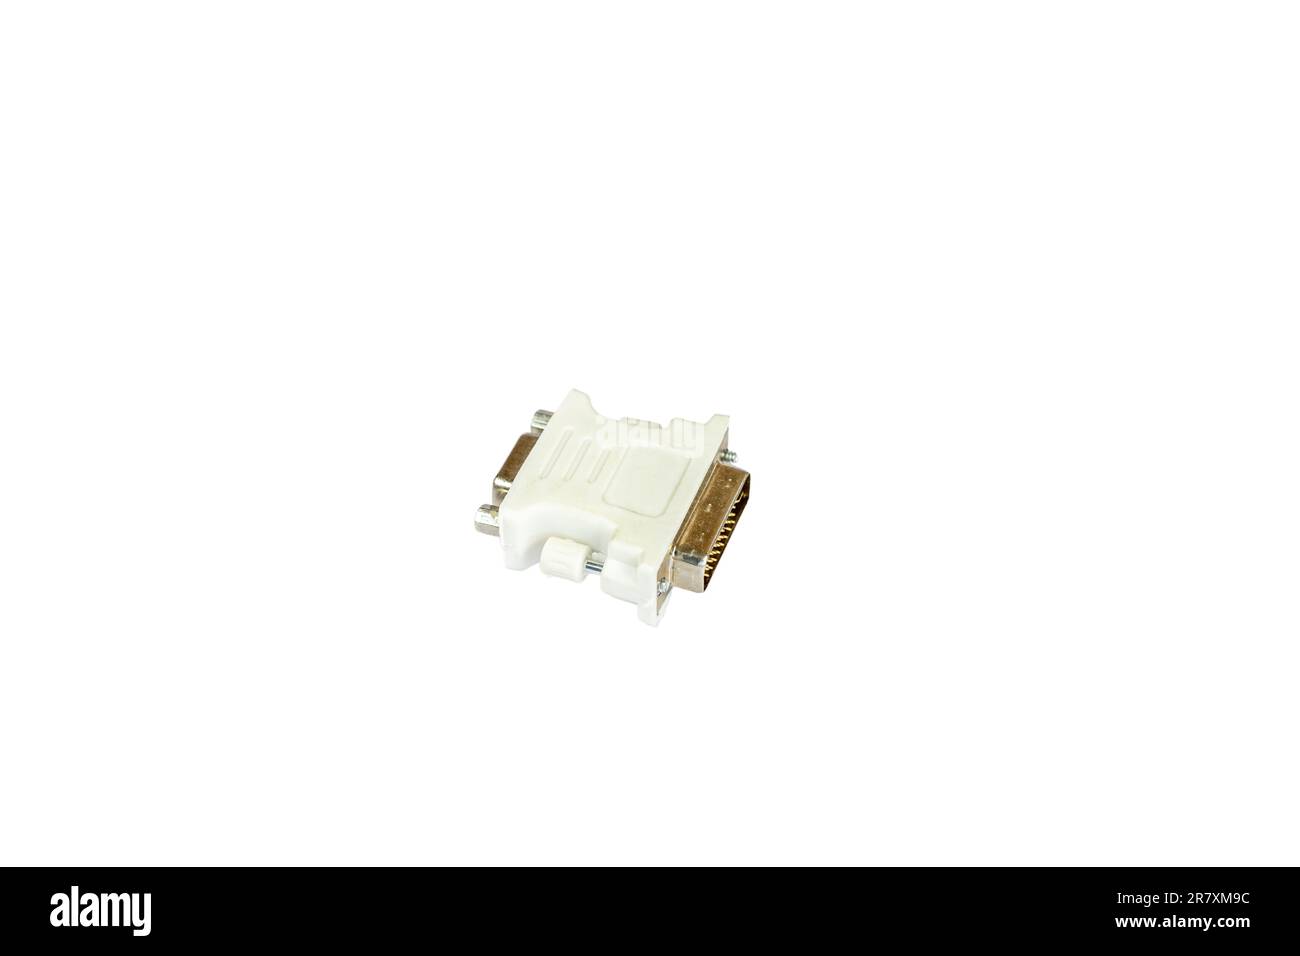 DVI to VGA display converter on isolated white background Stock Photo